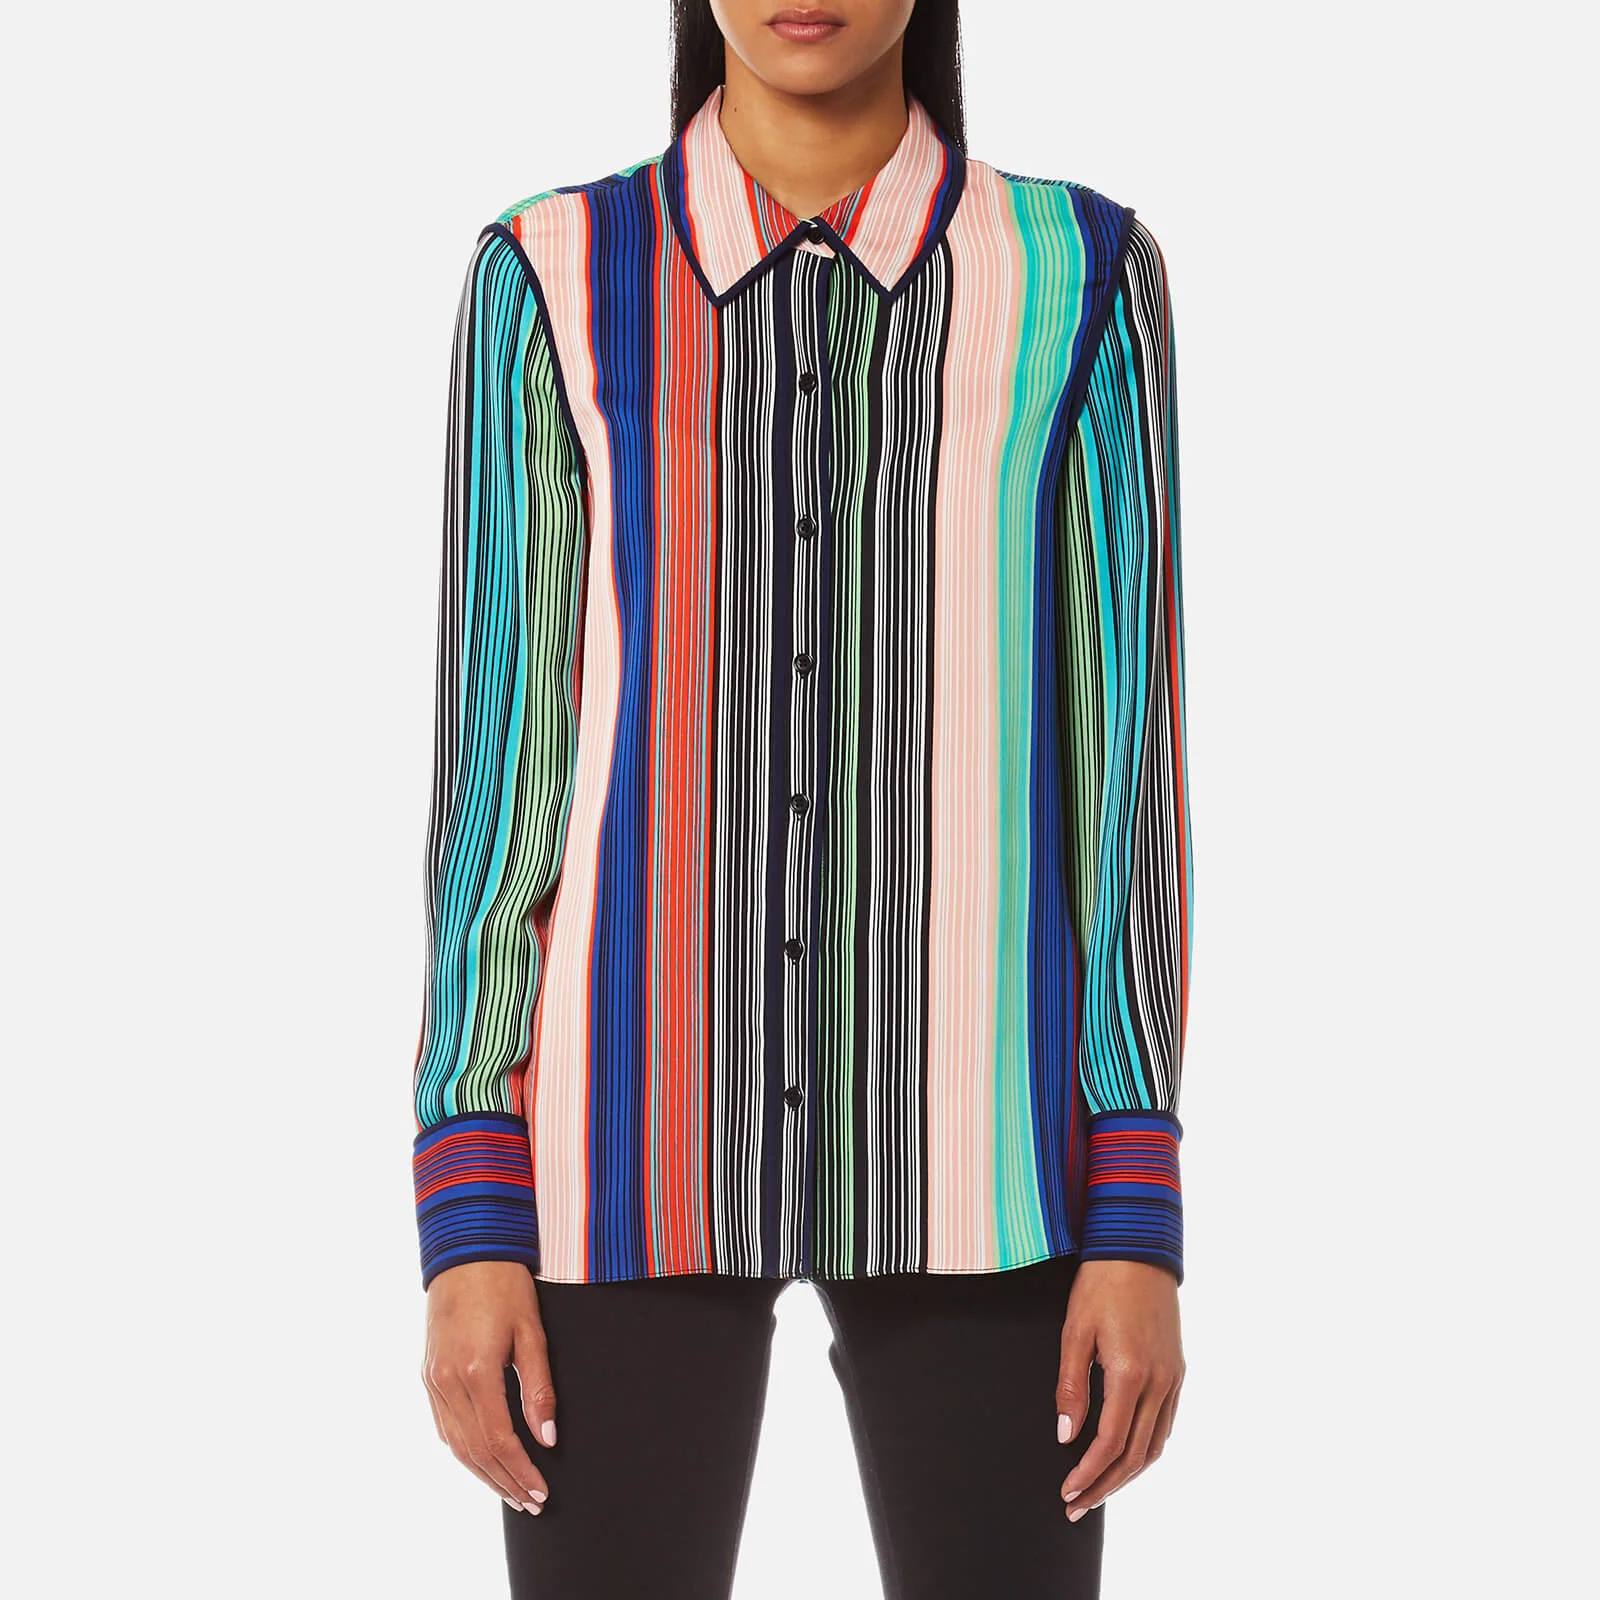 Diane von Furstenberg Women's Long Sleeved Collared Shirt - Burman Stripe Image 1